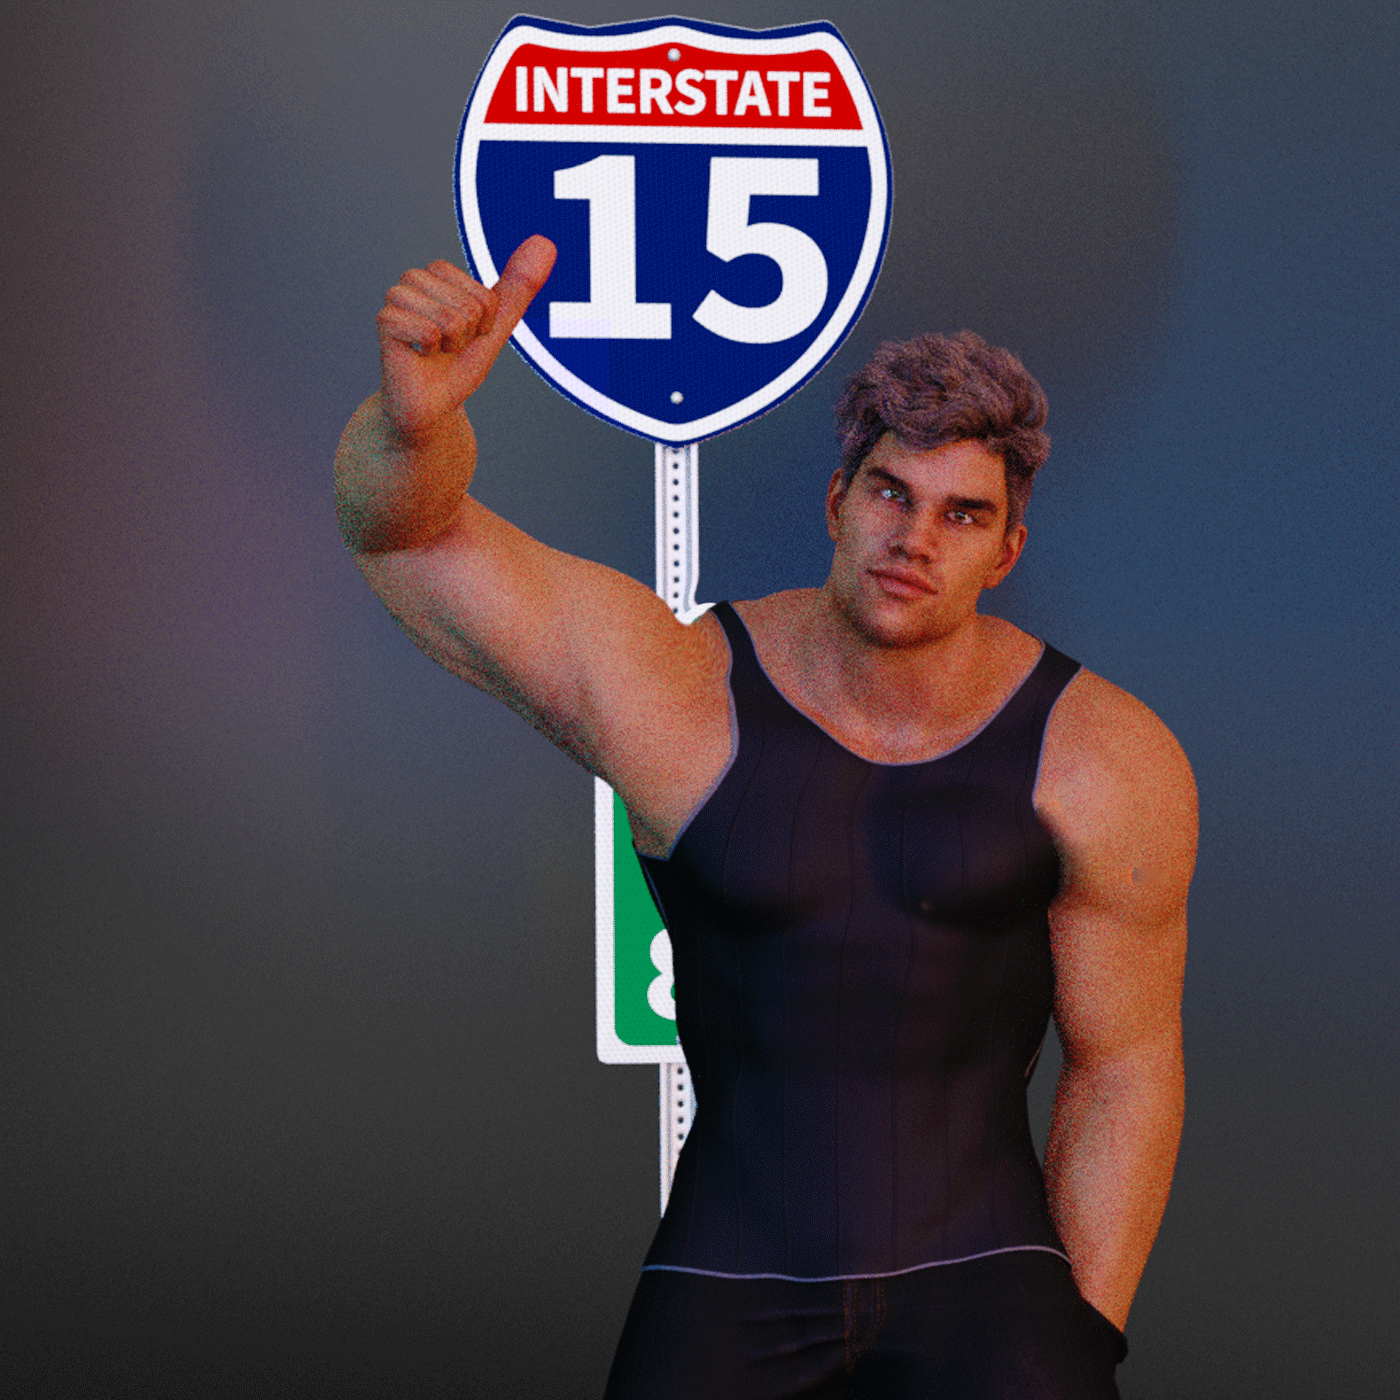 I-15 hitchhiker masculine wall art